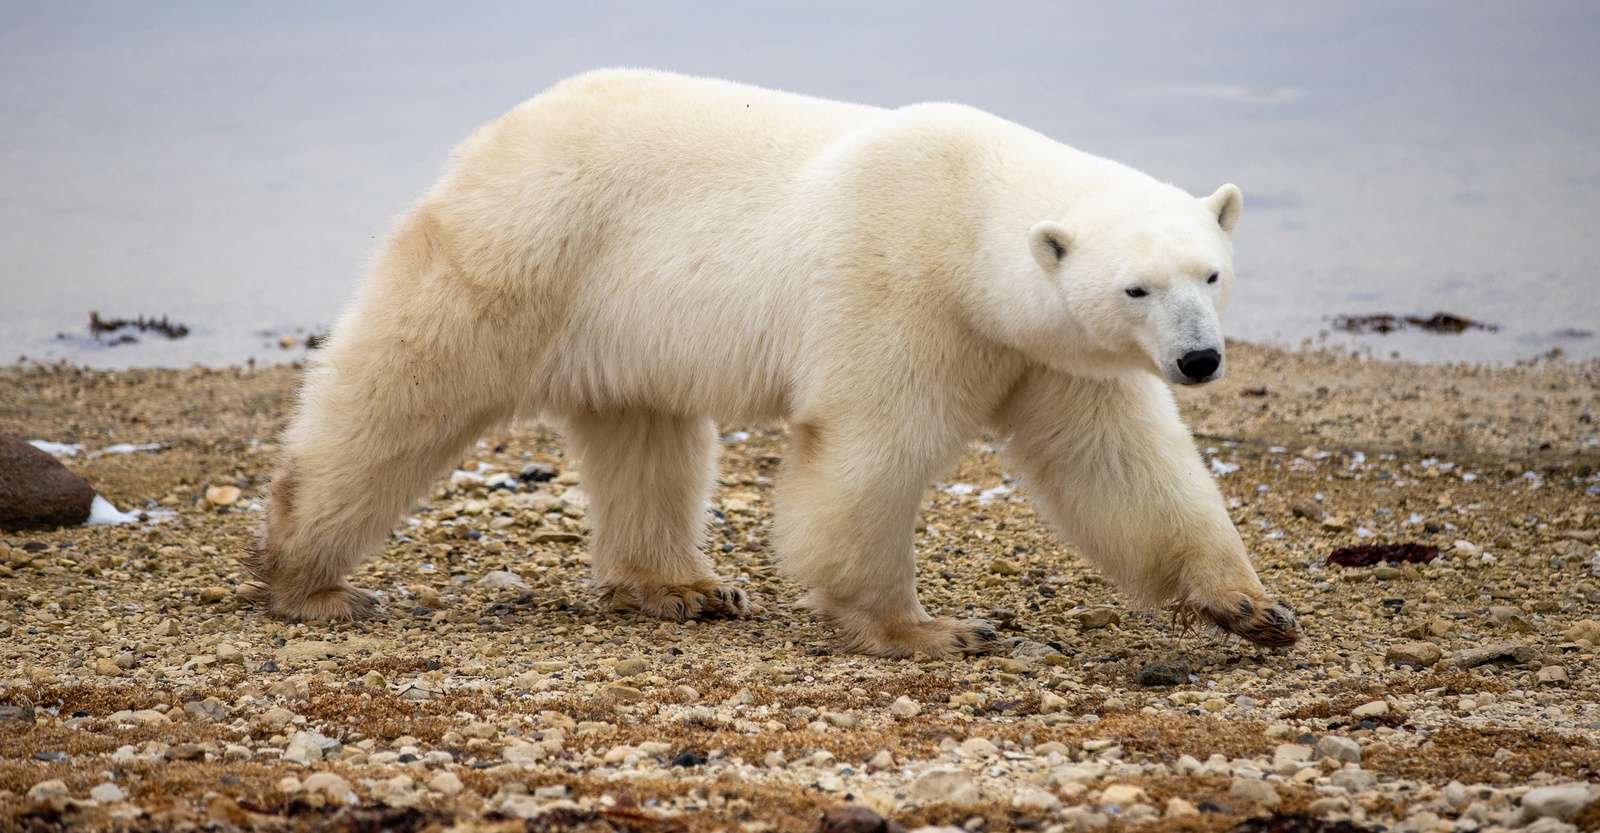 Polar bear, Churchill, Manitoba.